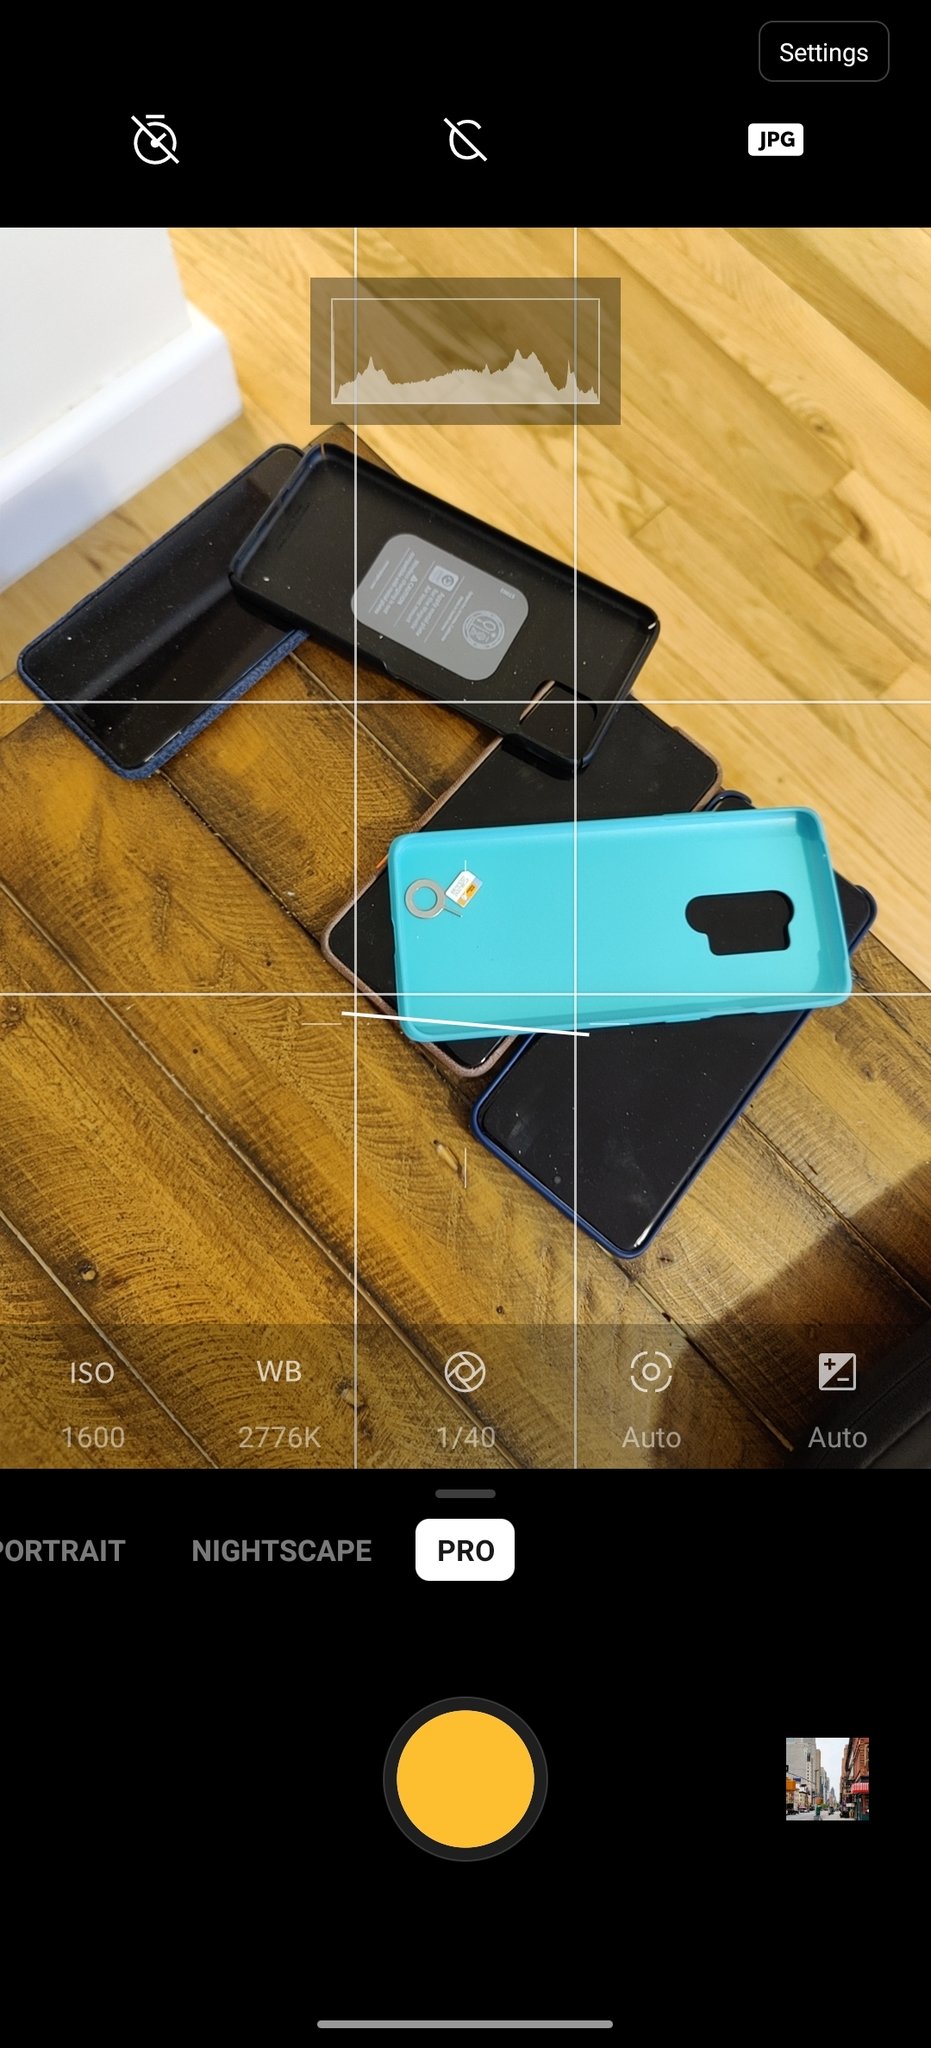 OnePlus 8 Pro camera